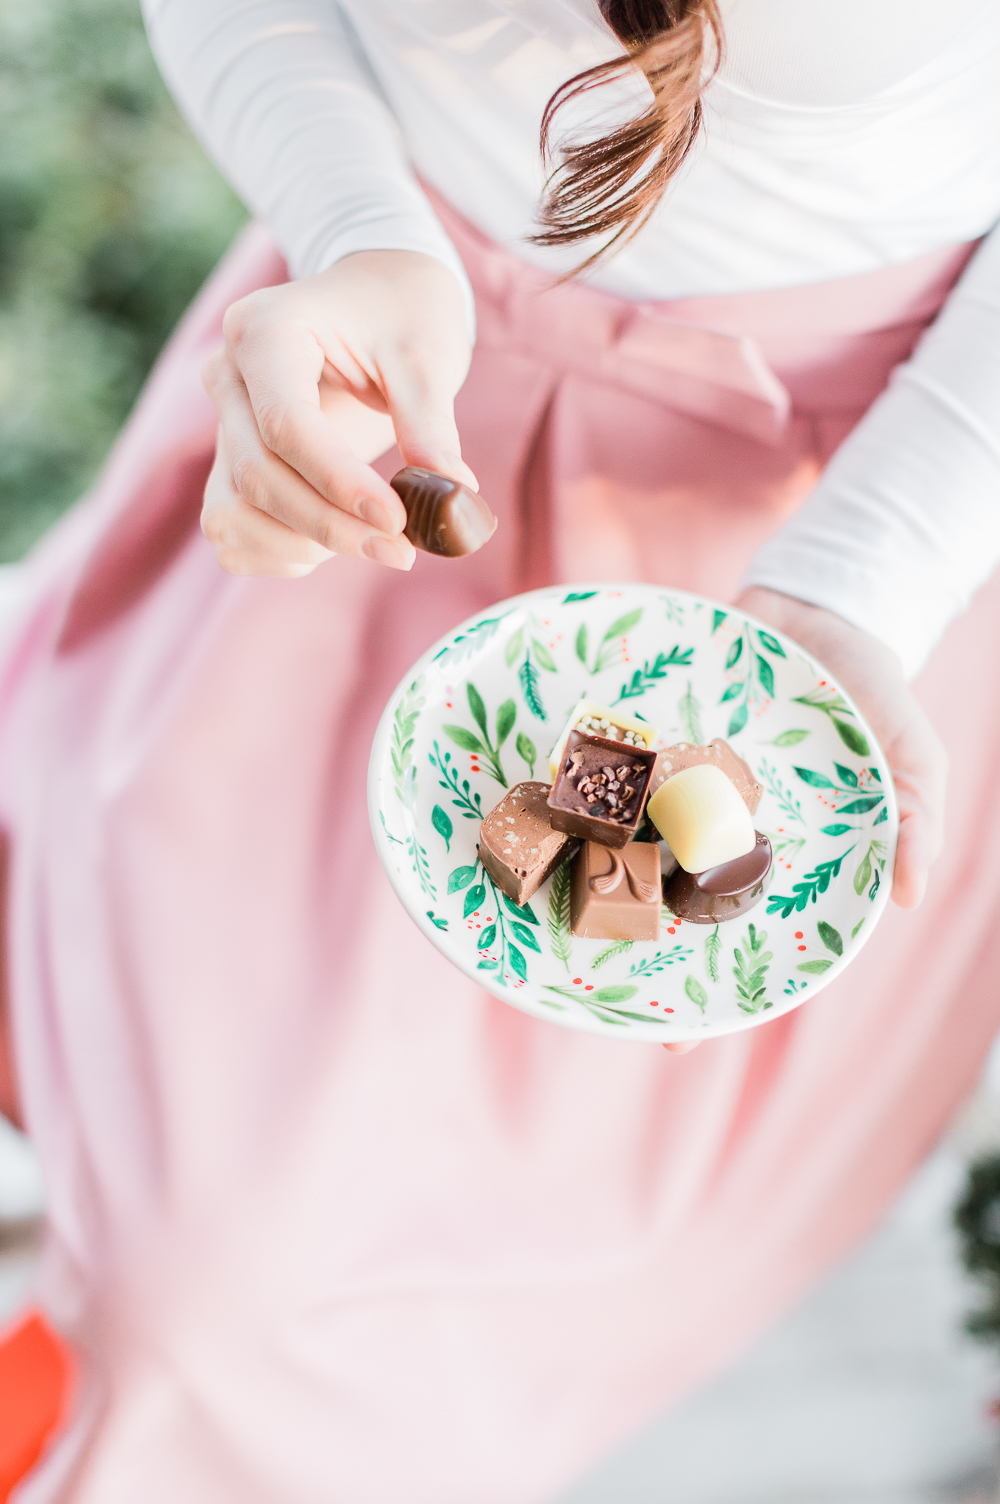 Ferrero Golden Gallery Signature Chocolates, girl eating chocolate, chocolates on a holiday tidbit plate, pink bow skirt, popular lifestyle blog Diary of a Debutante, popular lifestyle blogger Stephanie Ziajka